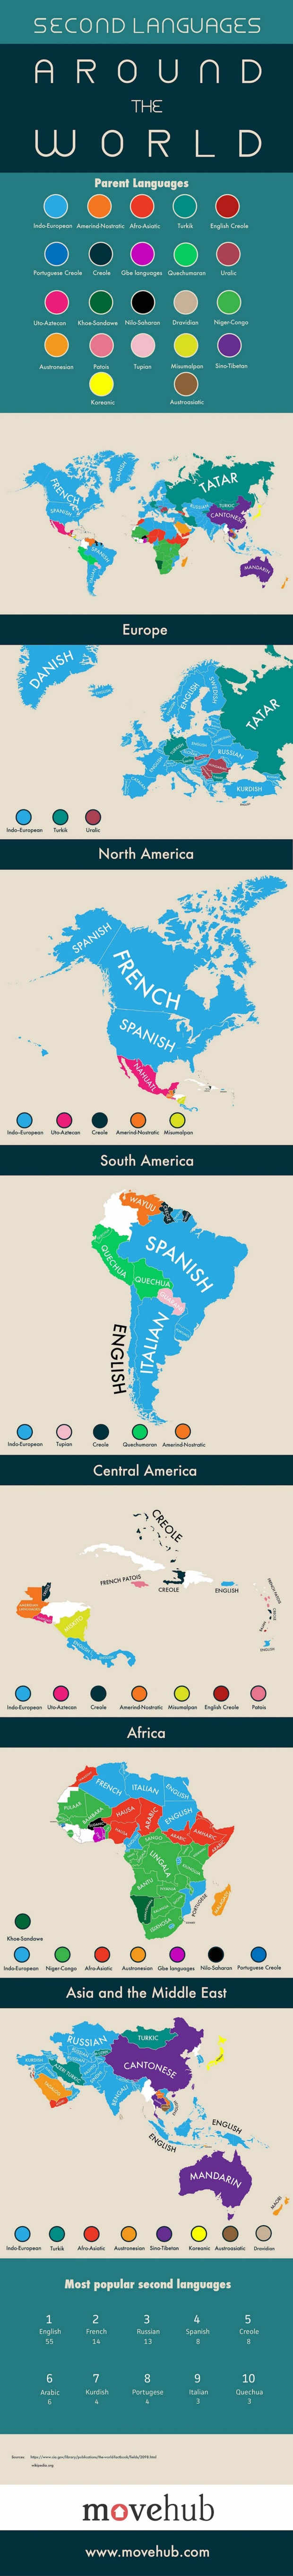 infografia_idiomas4